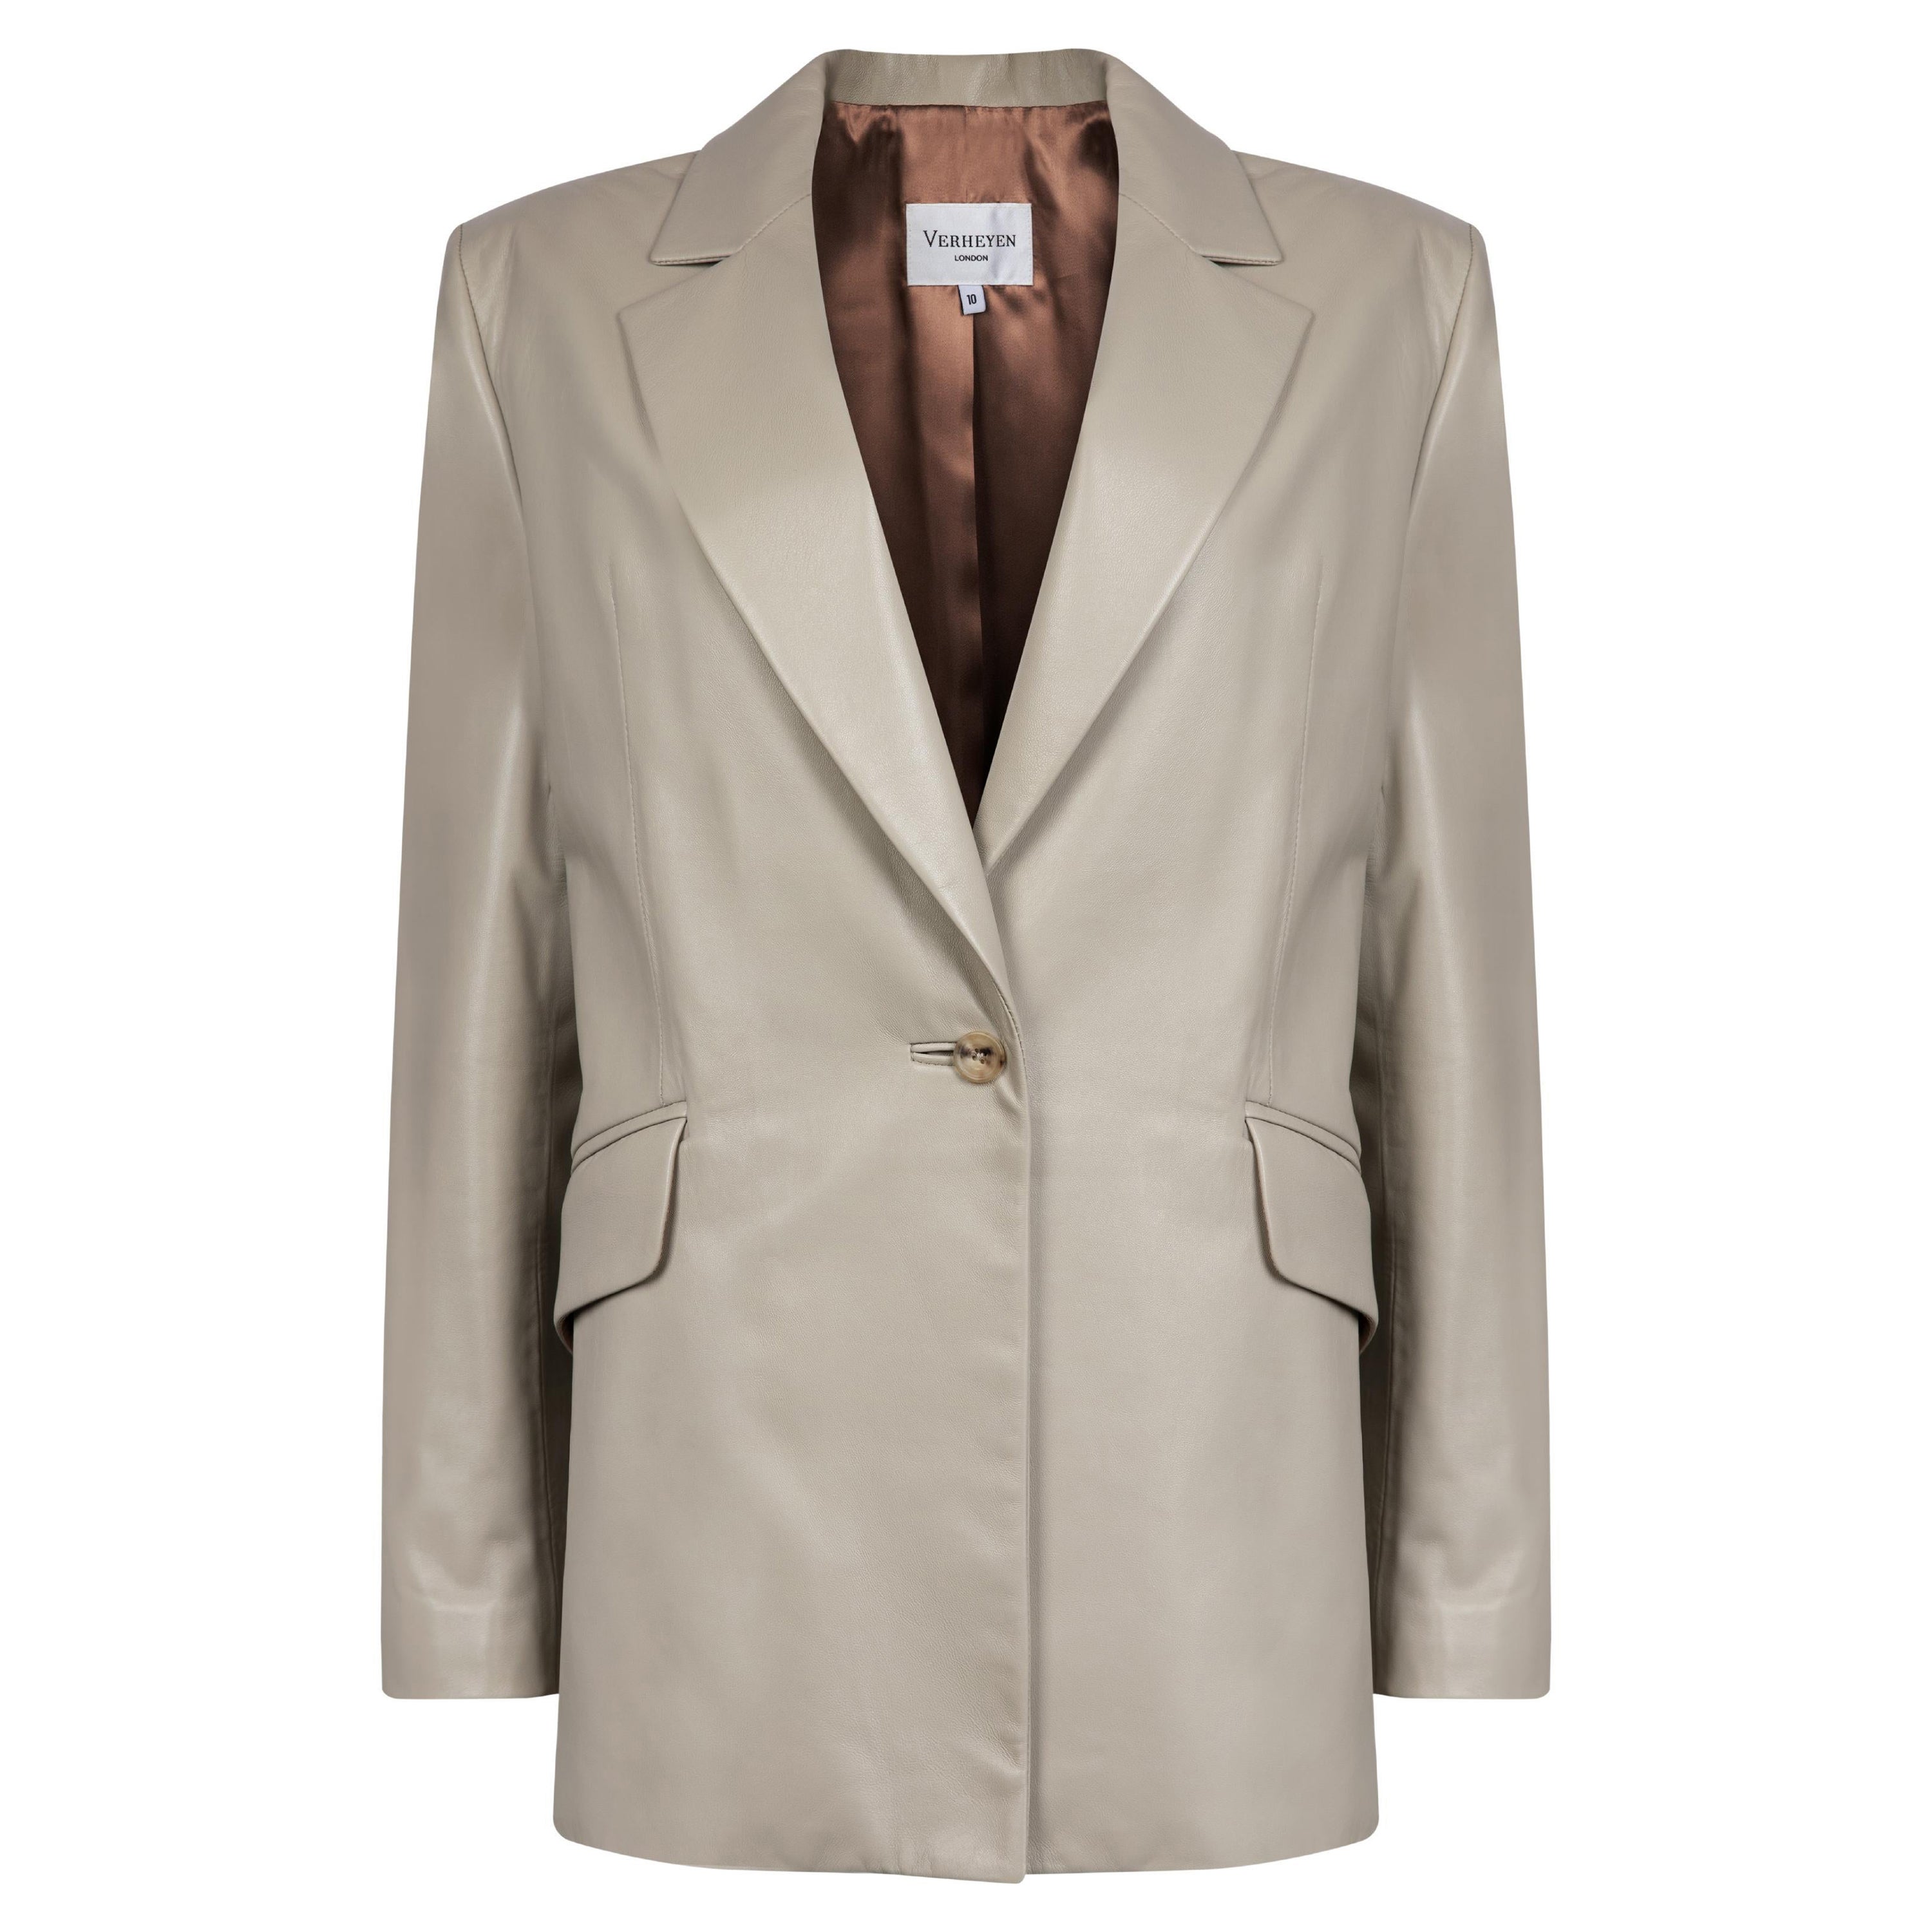 Verheyen London Chesca Oversize Blazer in Stone Grey Leather, Size 6 For Sale